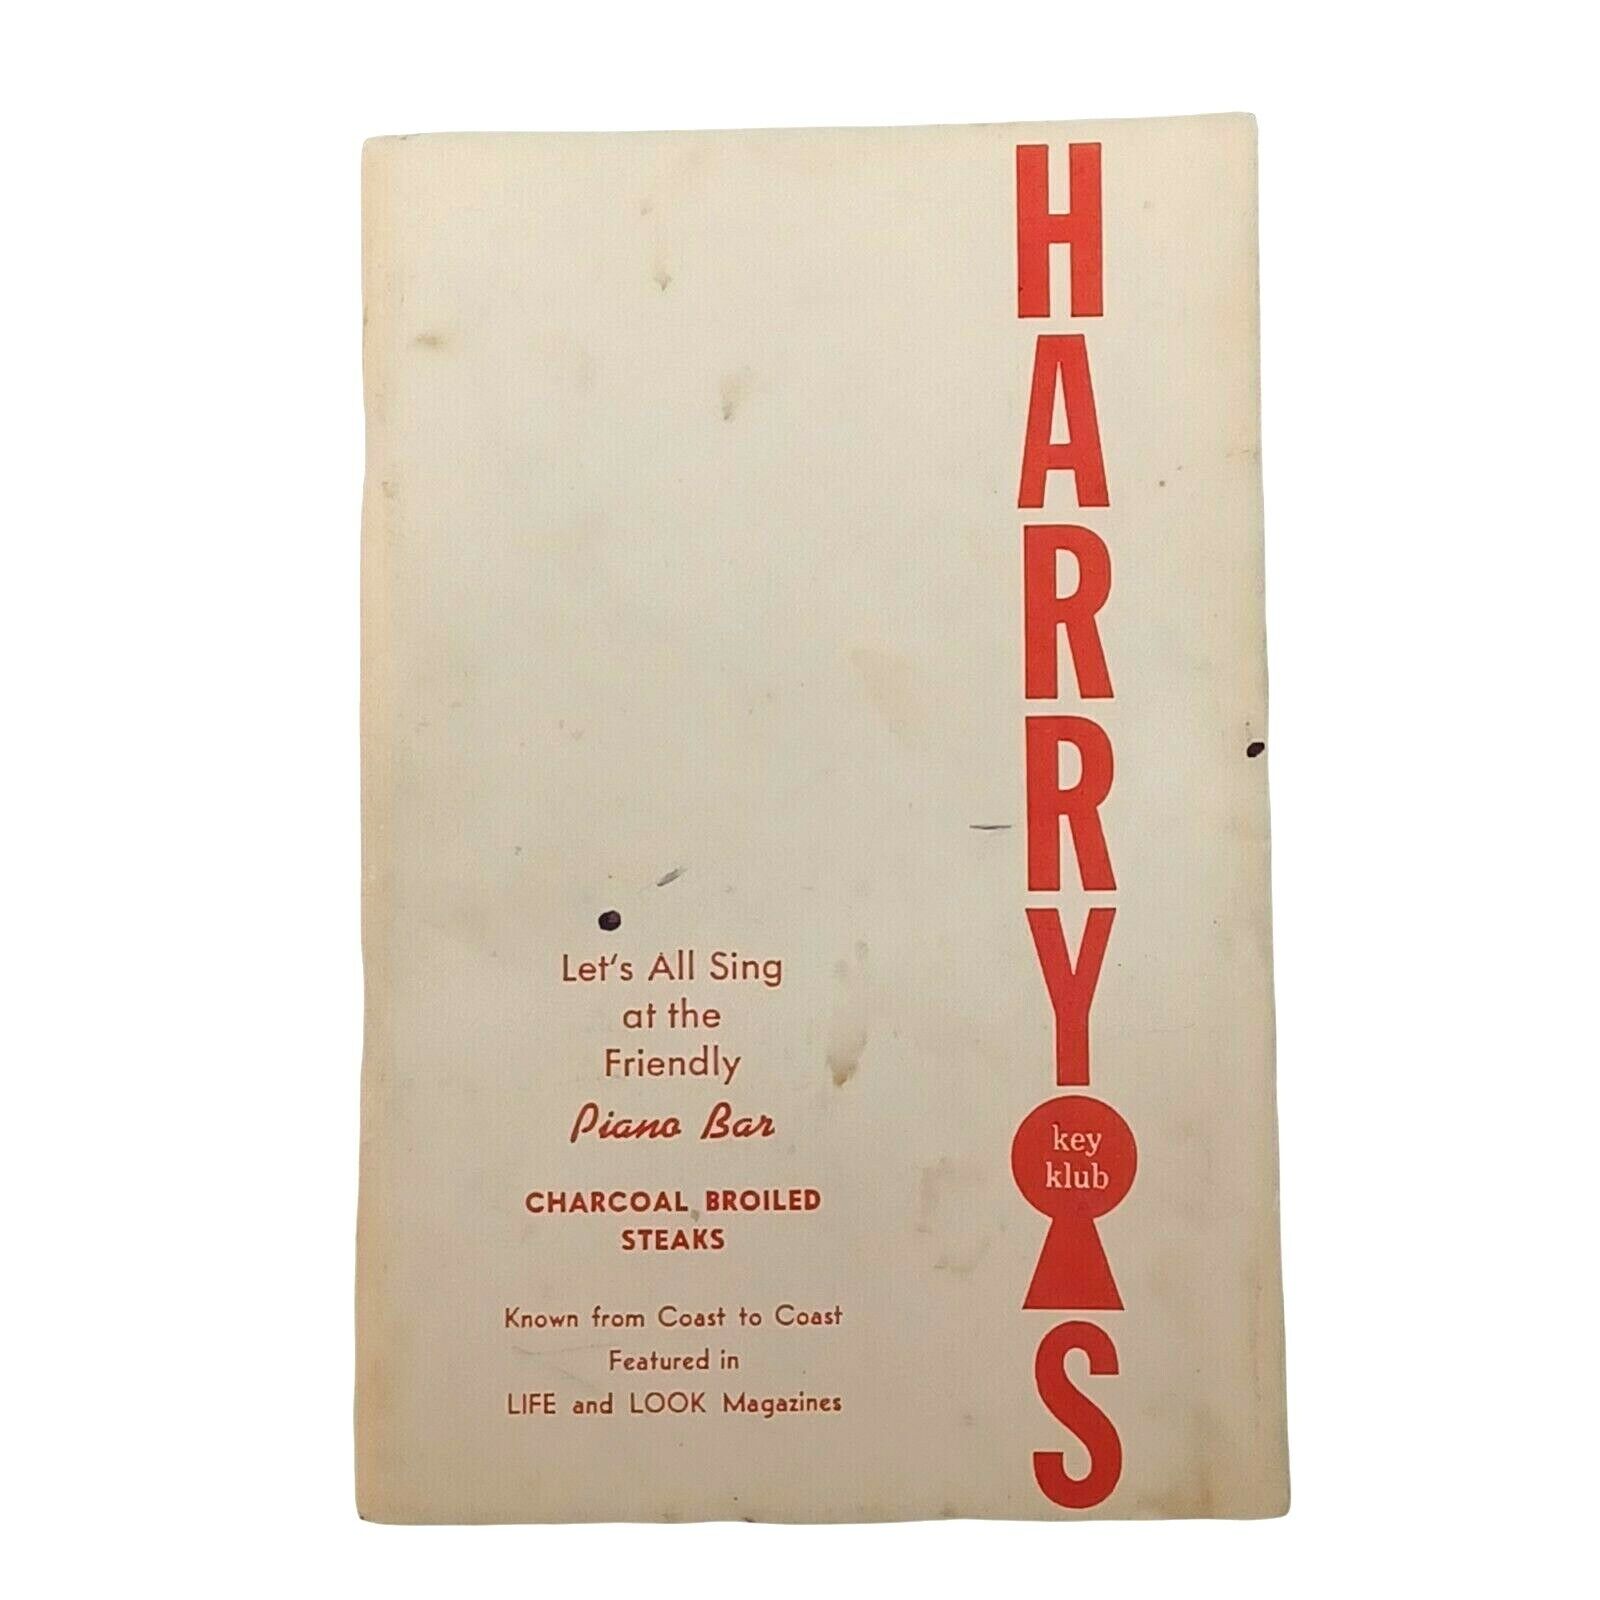 Harry’s Key Club Menu & Sing-a-Long Booklet Omaha NE 182 lyrics 52 pages.